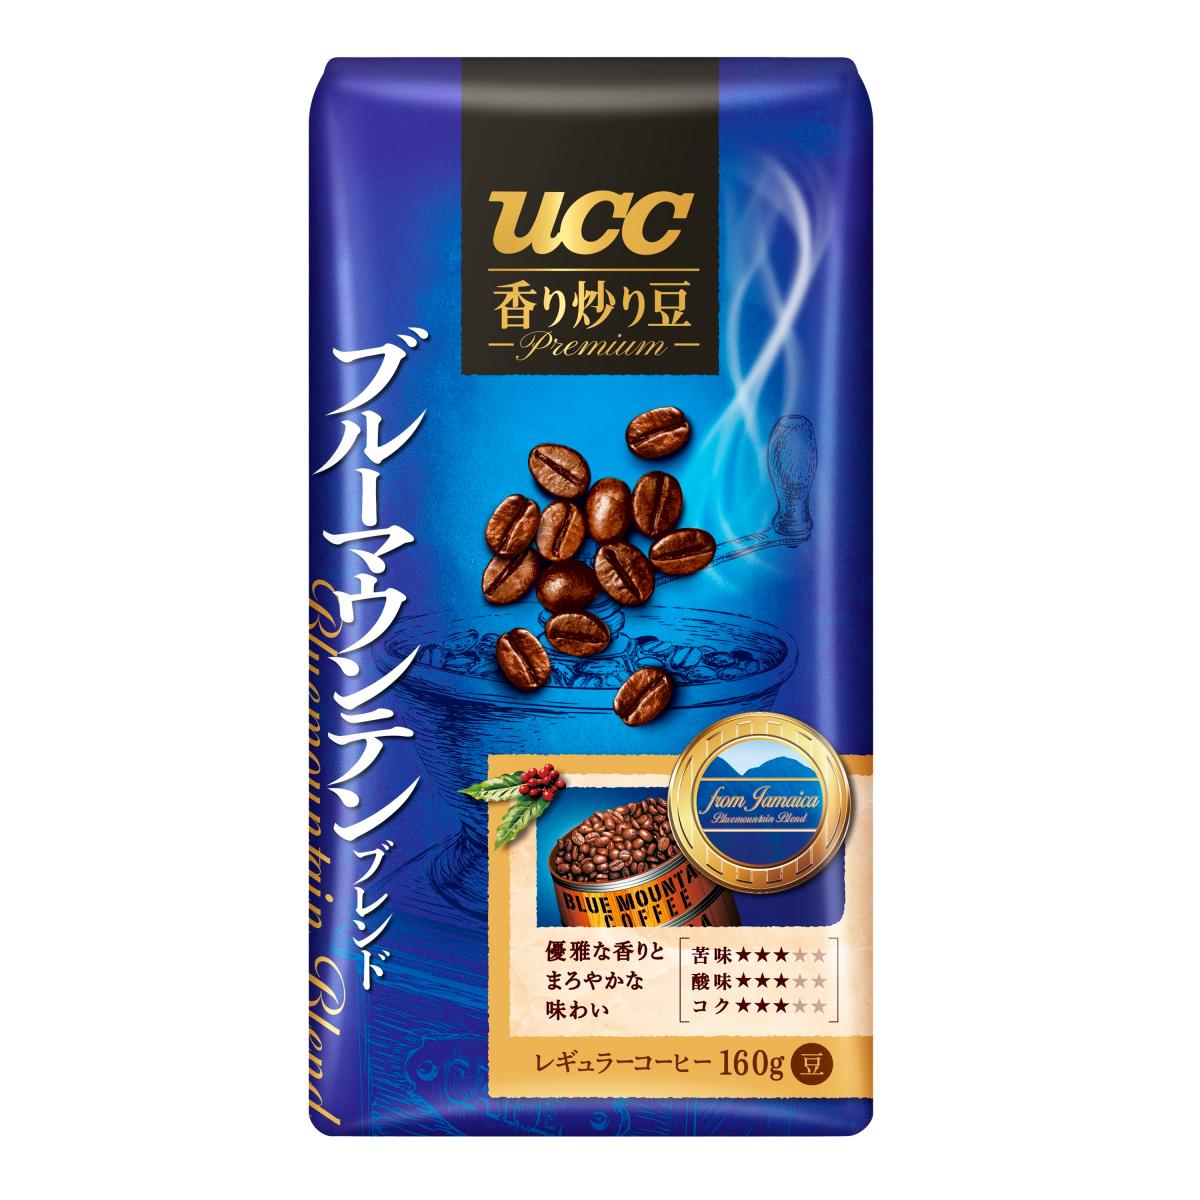 UCC ブルーマウンテン コーヒー (豆) 160g